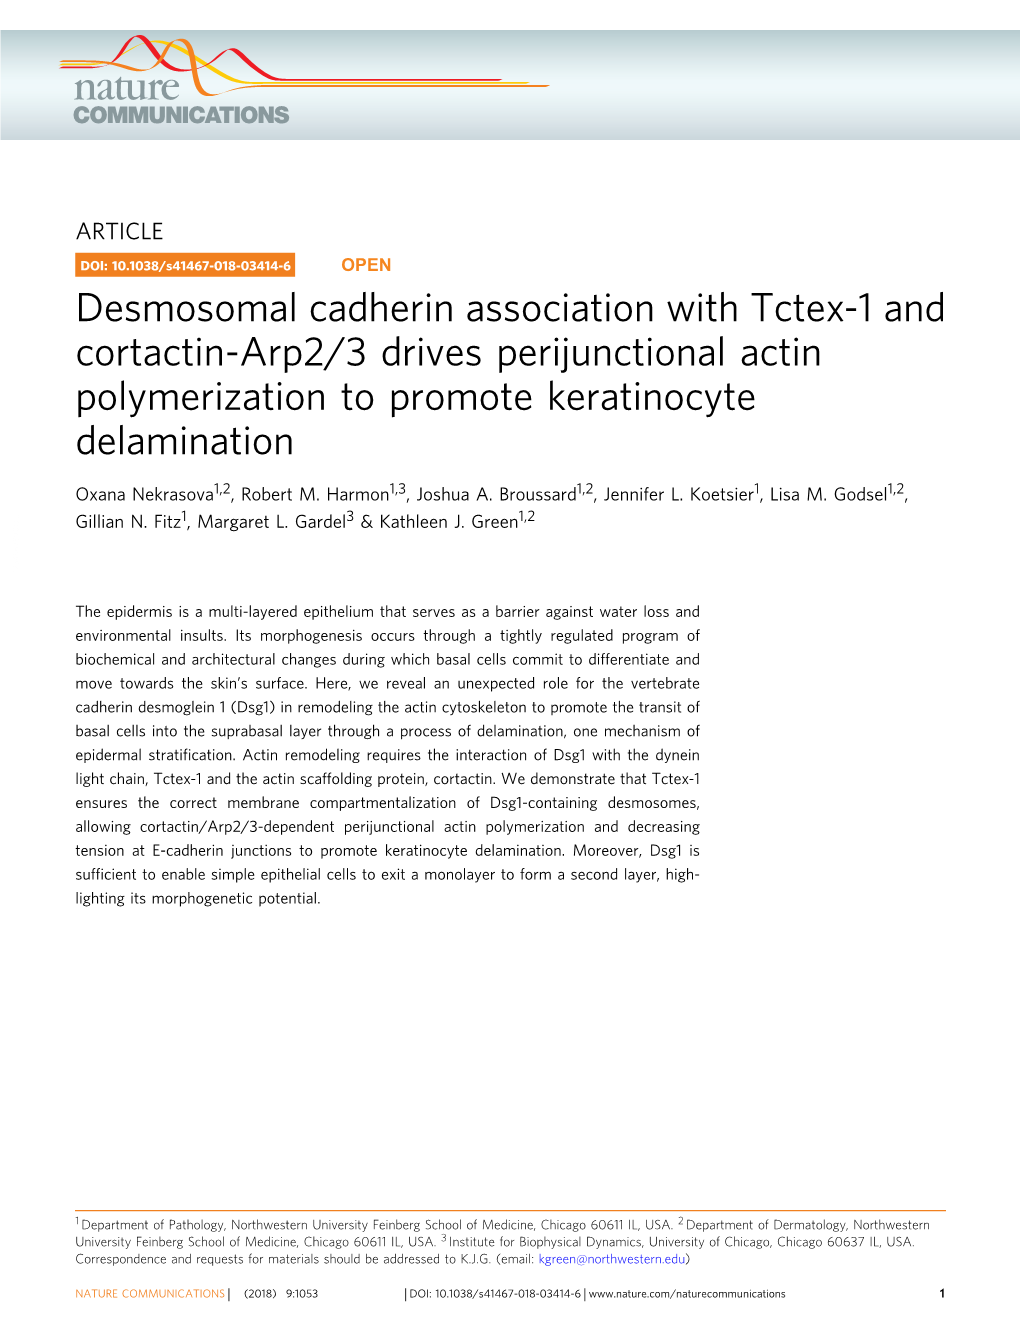 Desmosomal Cadherin Association with Tctex-1 and Cortactin-Arp2/3 Drives Perijunctional Actin Polymerization to Promote Keratinocyte Delamination